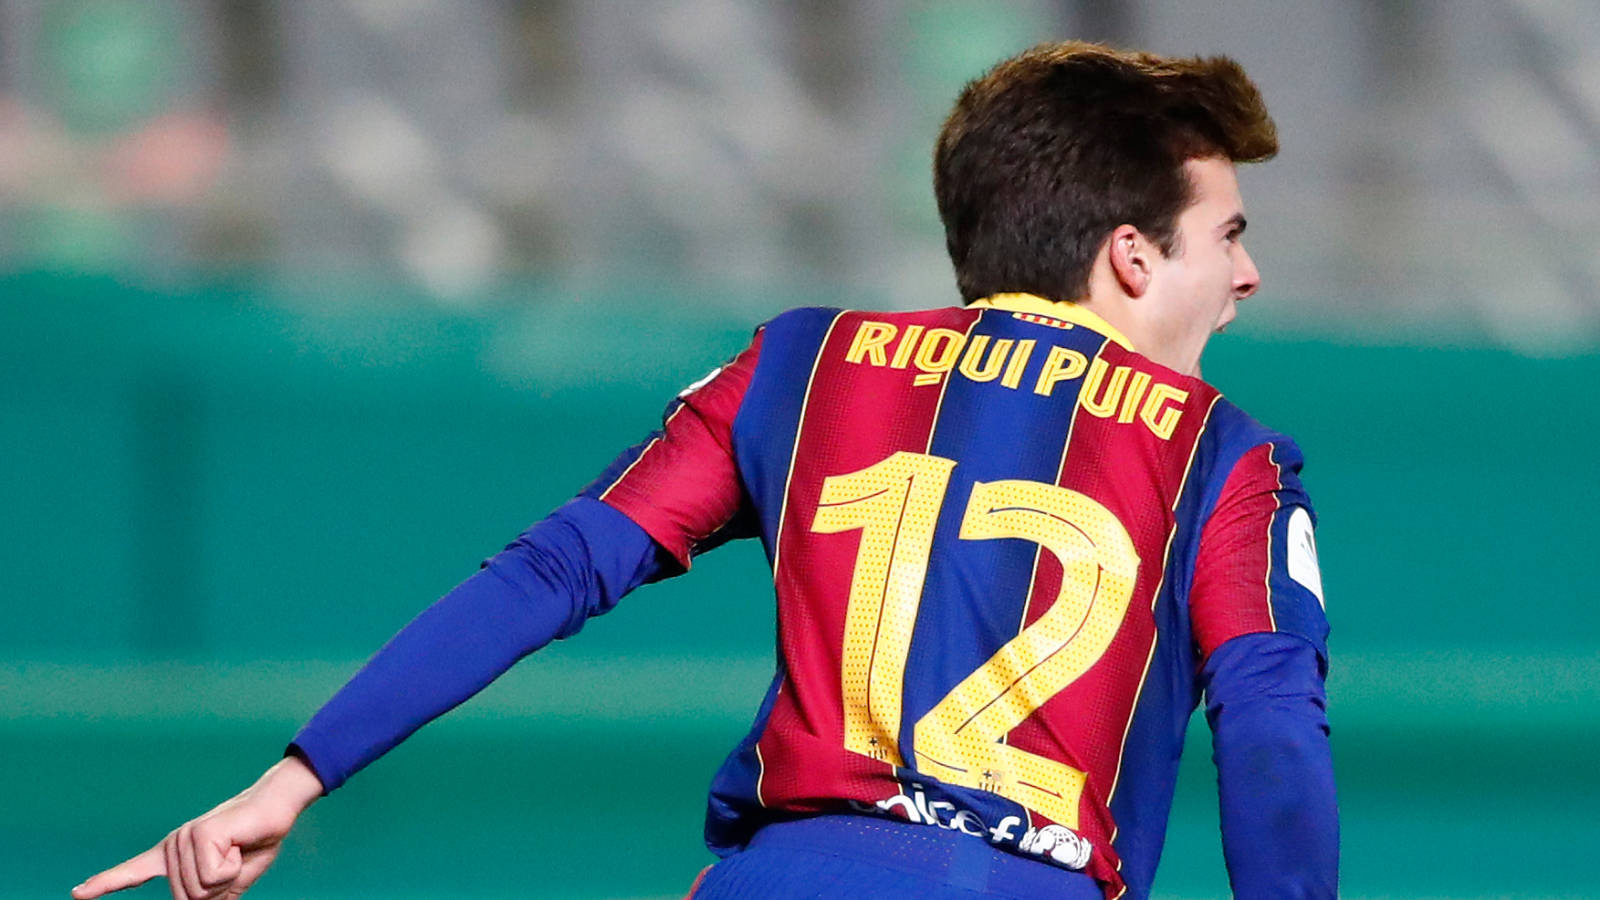 Riqui Puig vinder målsejr for Barcelona mod Real Sociedad Wallpaper